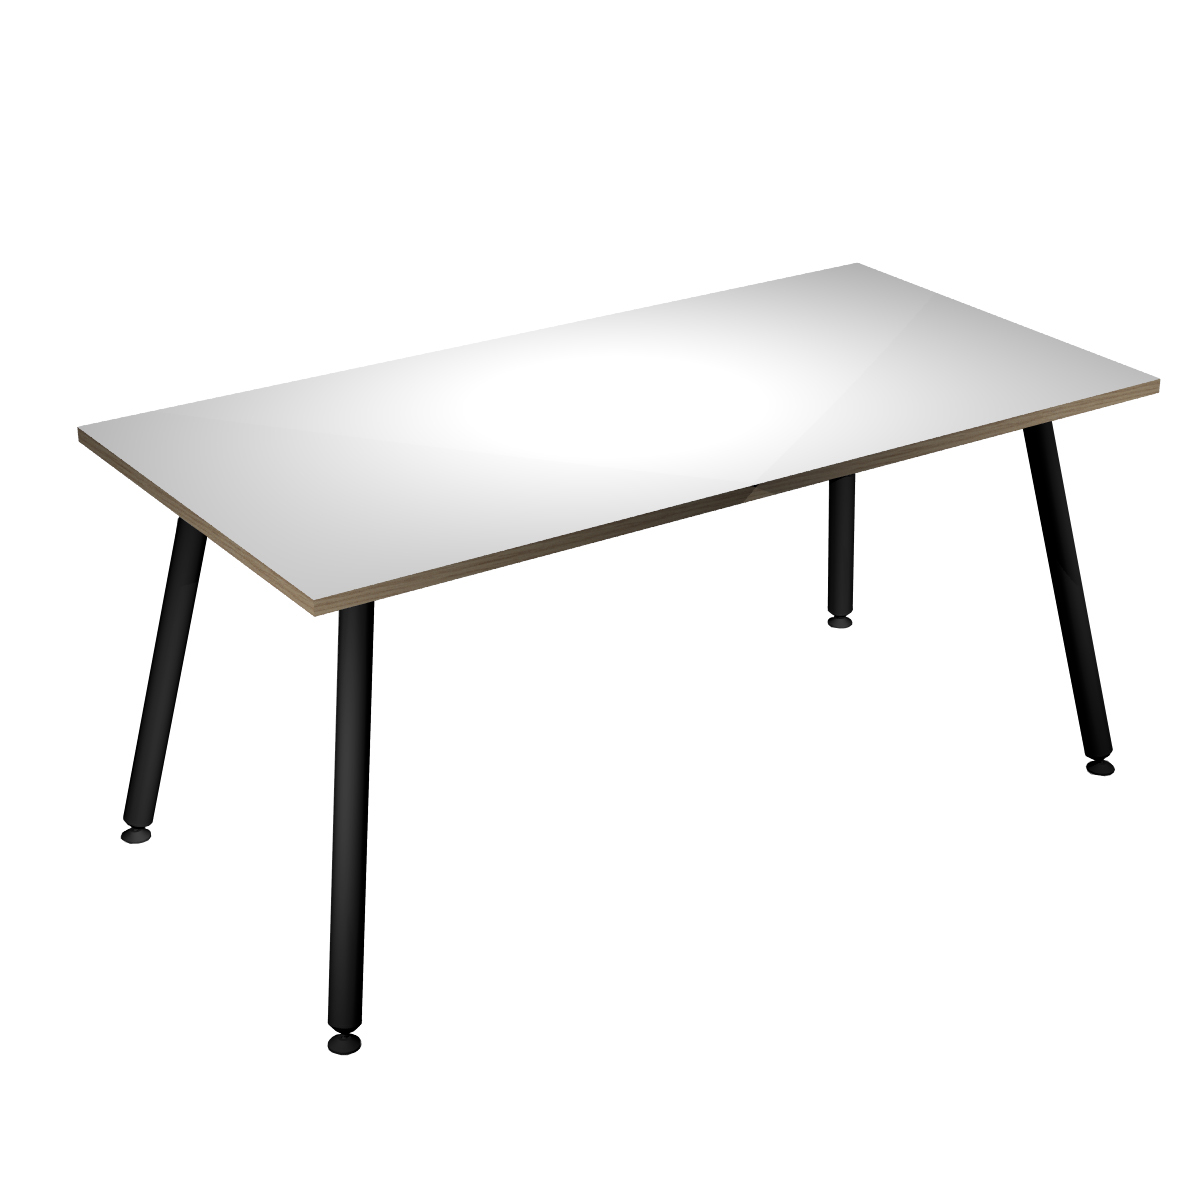 Table haute LEONARDO - 140 x 80 x 105 cm - Pieds métal noirs - Blanc chants chêne